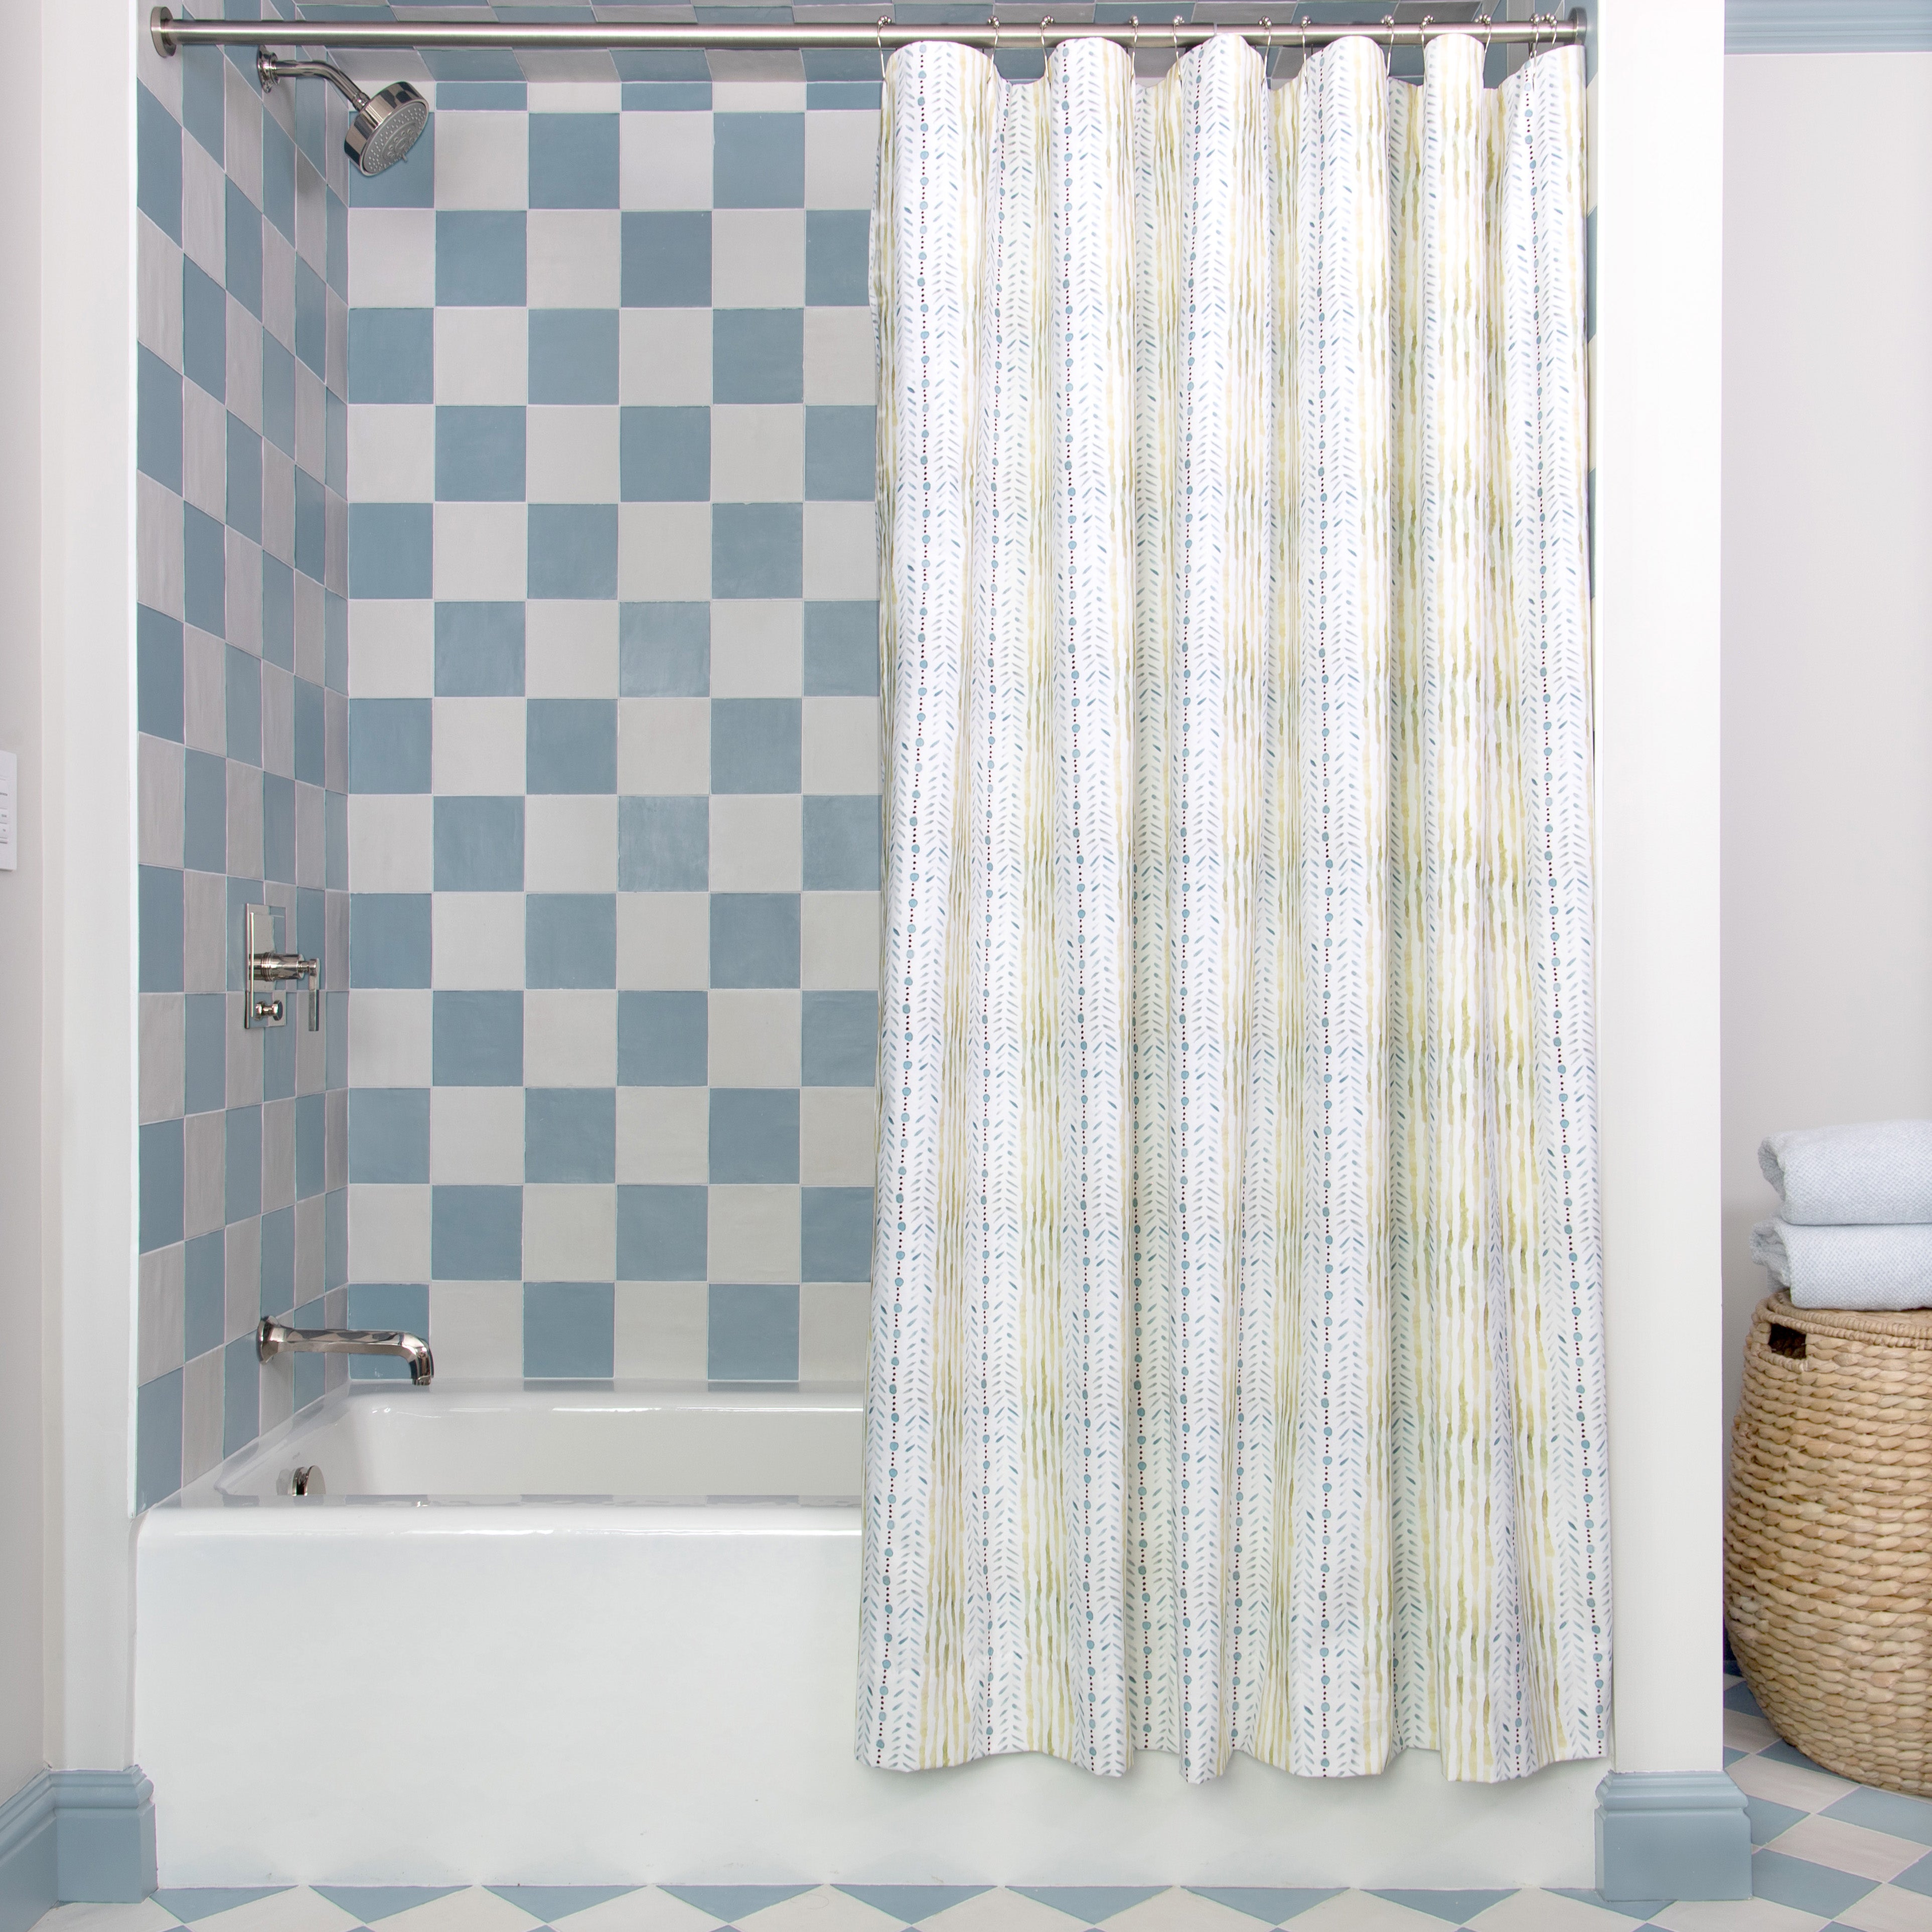 Custom Shower Curtain